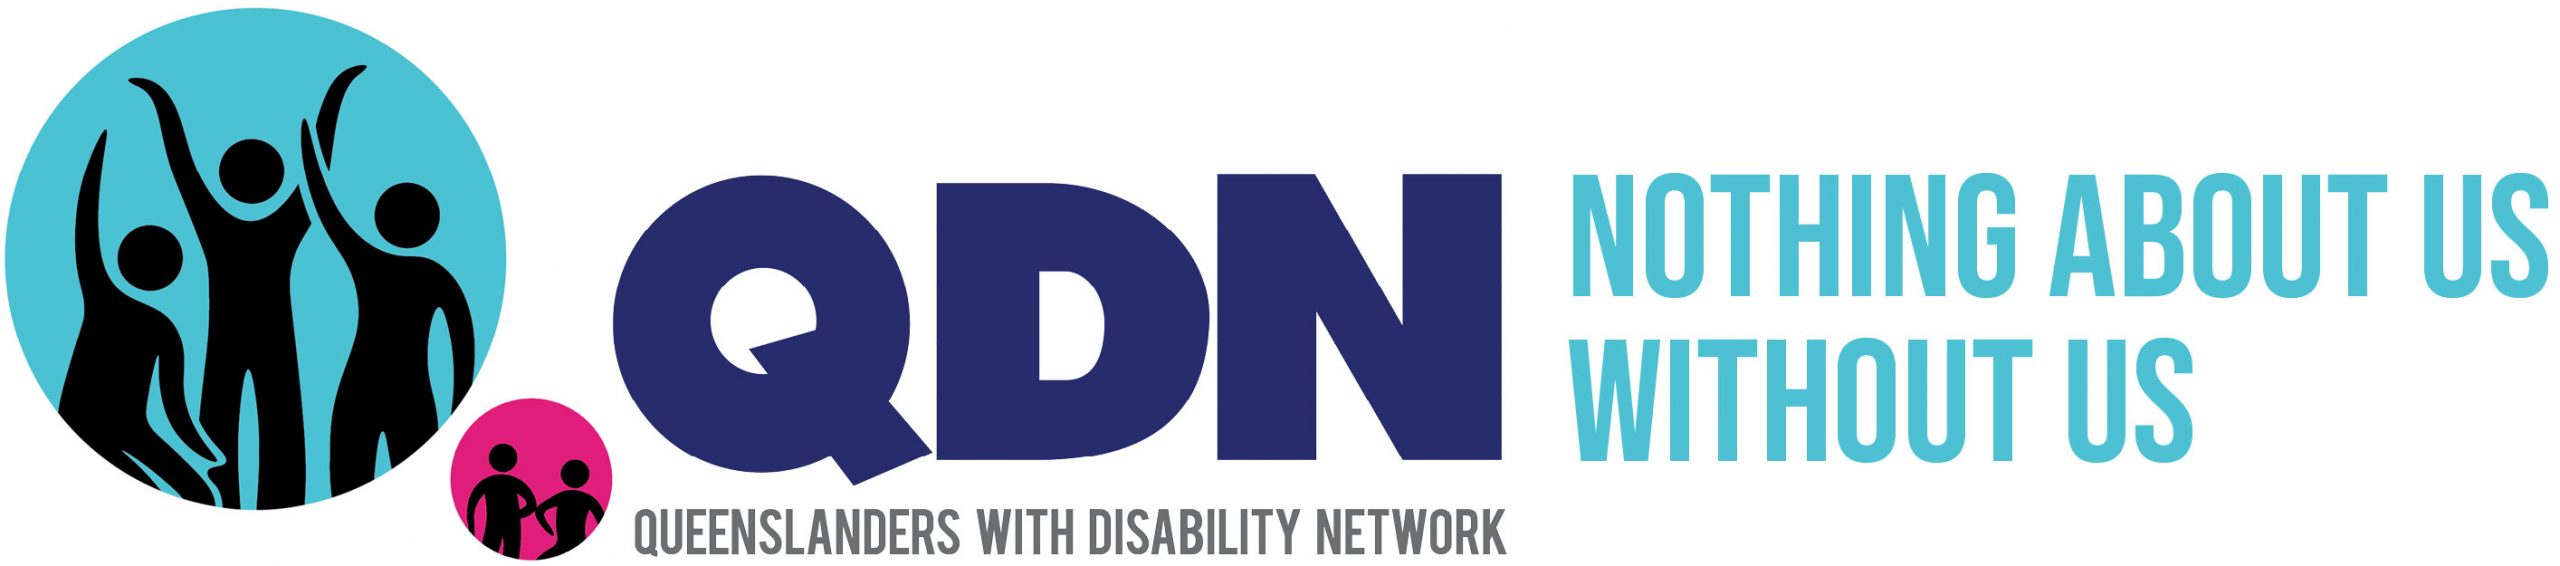 Queensland disability network logo